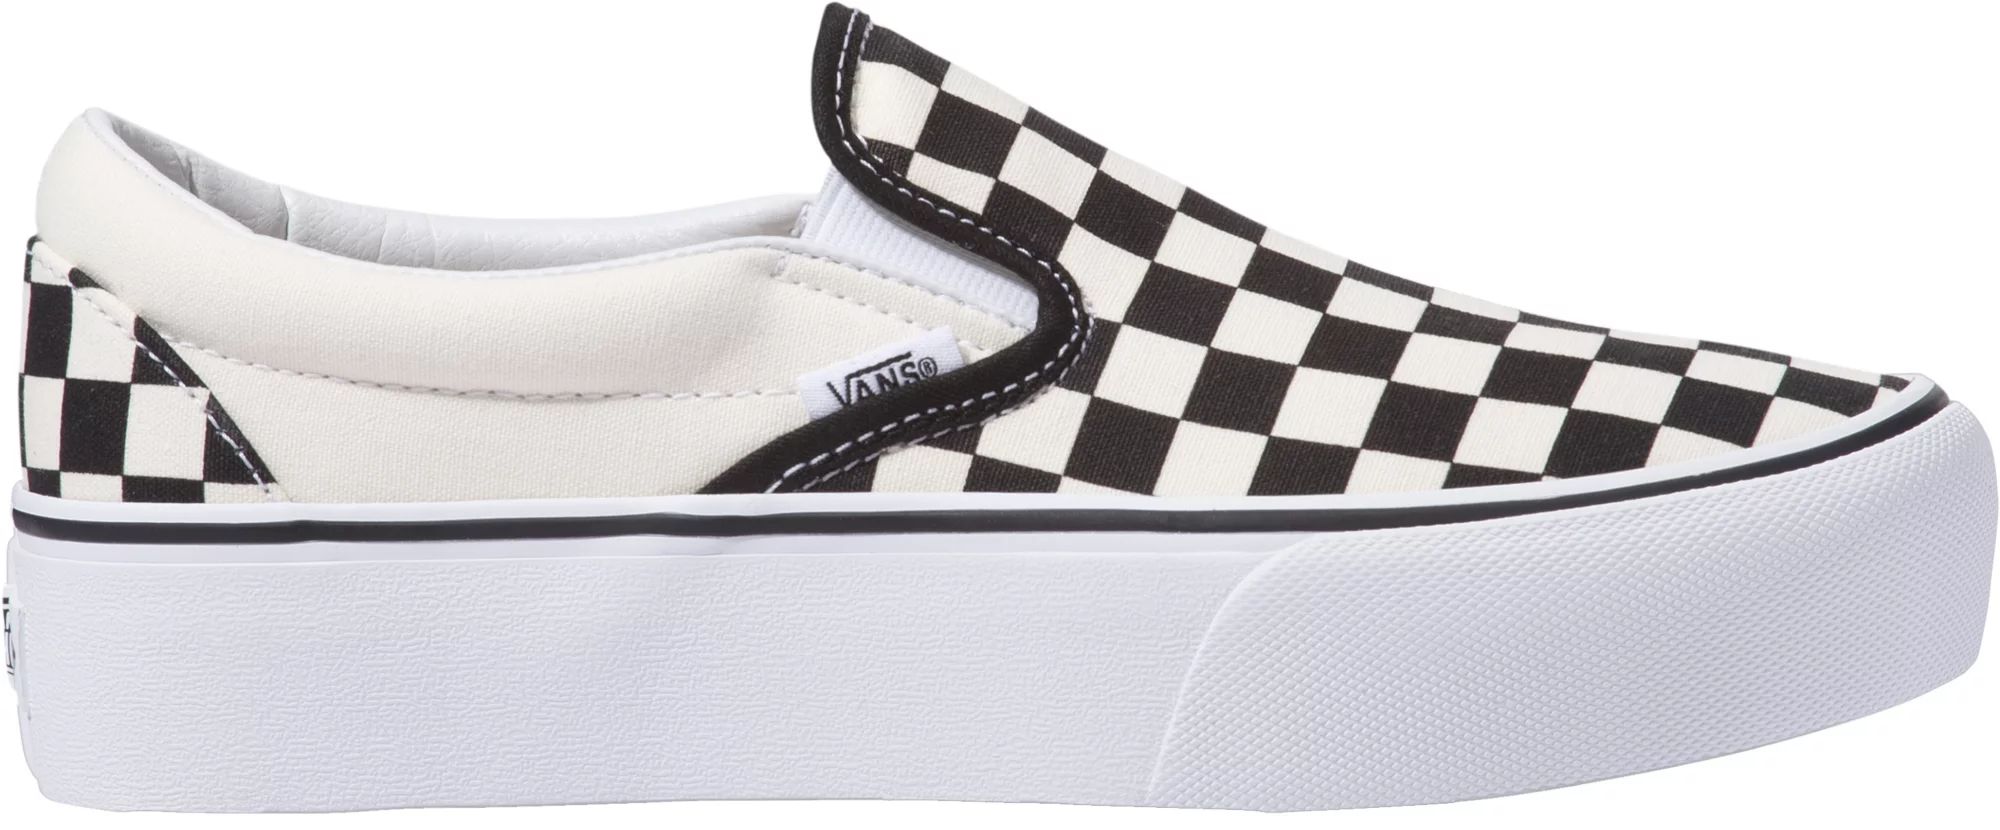 Vans Classic Slip-On Checkered Platform Shoes, Men's, M3.5/W5, Black - Back to School | Public Lands